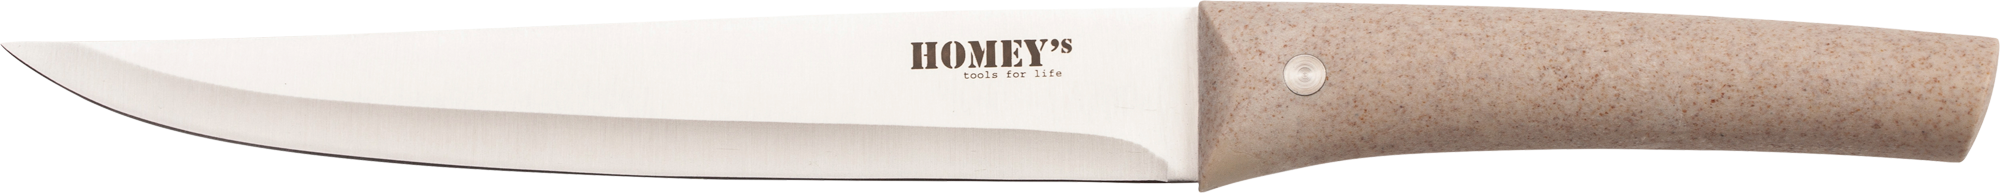 Homeys Vitt Fleischmesser 33 cm beige/silber